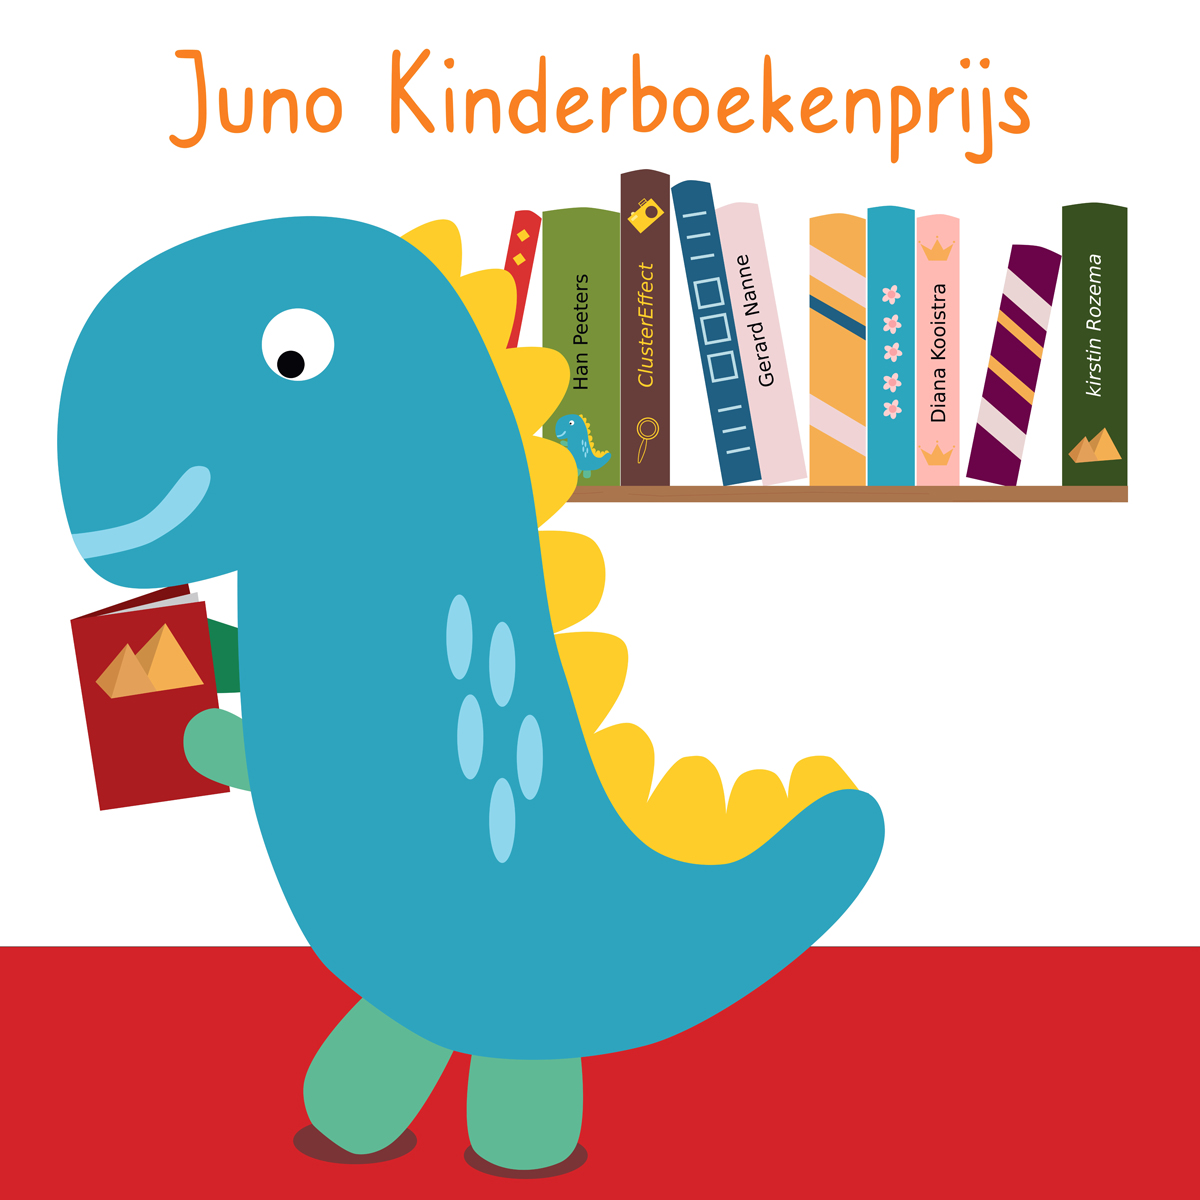 Eerste Juno Kinderboekenfestival groot succes